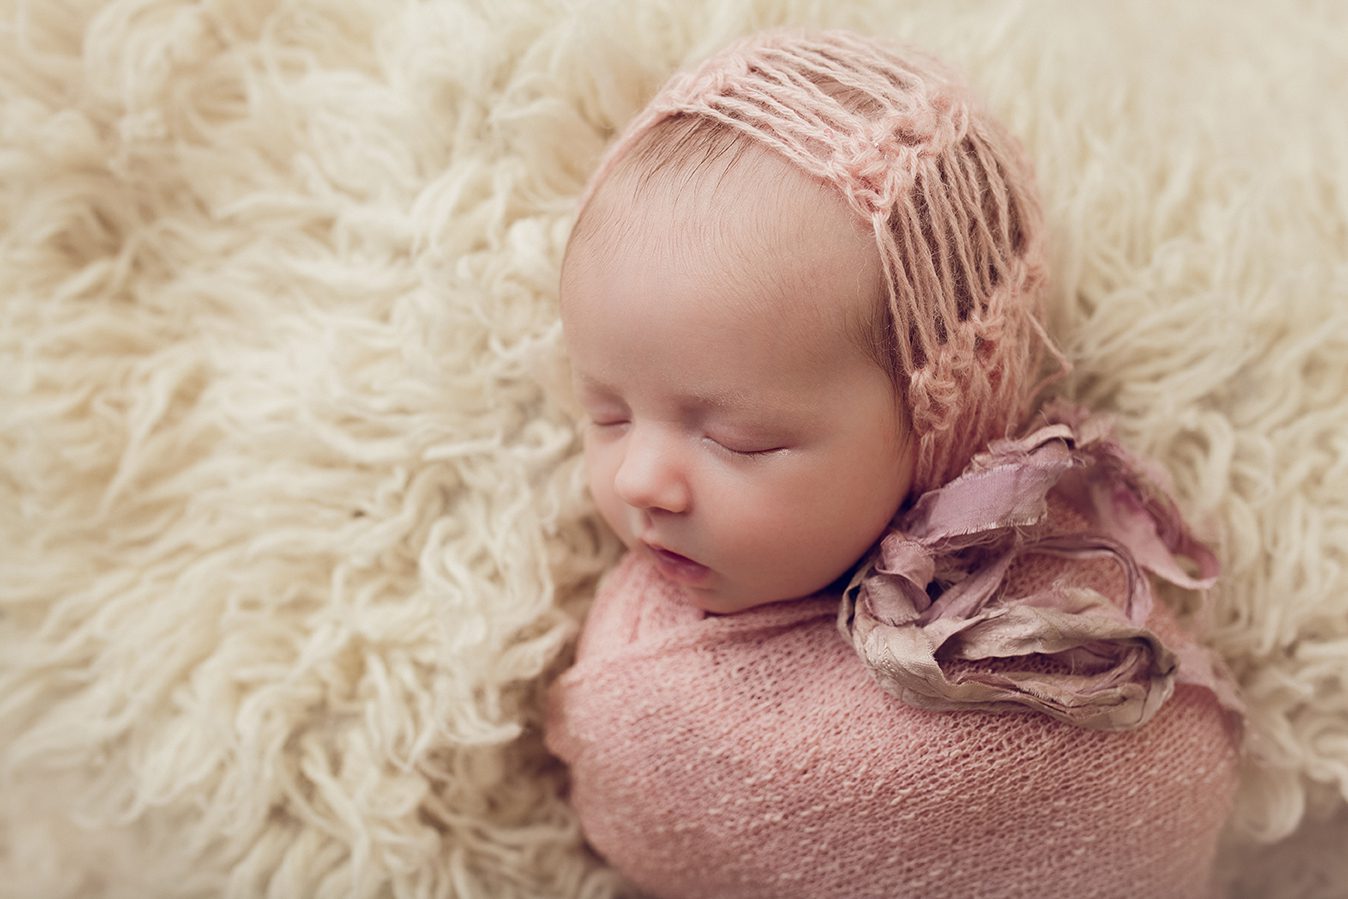 edmonton newborn photographer - wrapped in pink